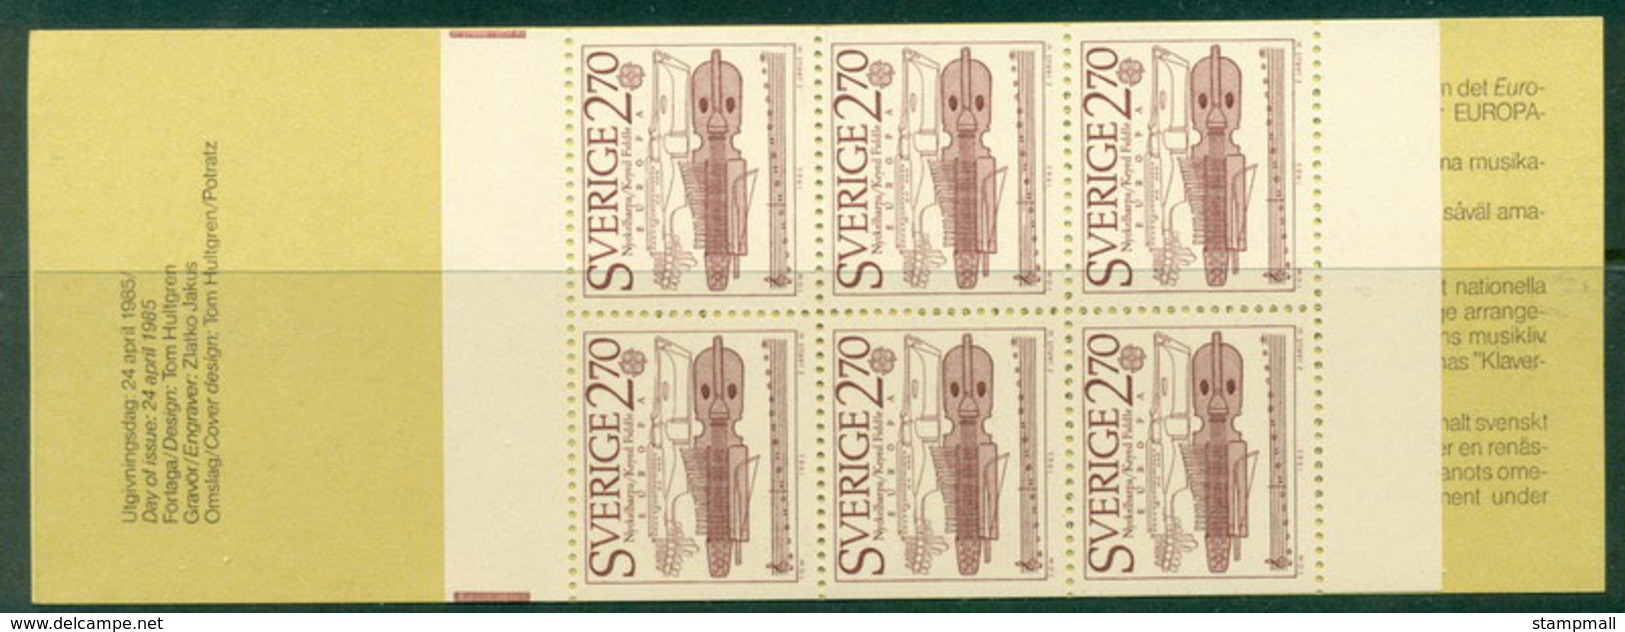 Sweden 1985 Europa Booklet MUH Lot17624 - Unused Stamps